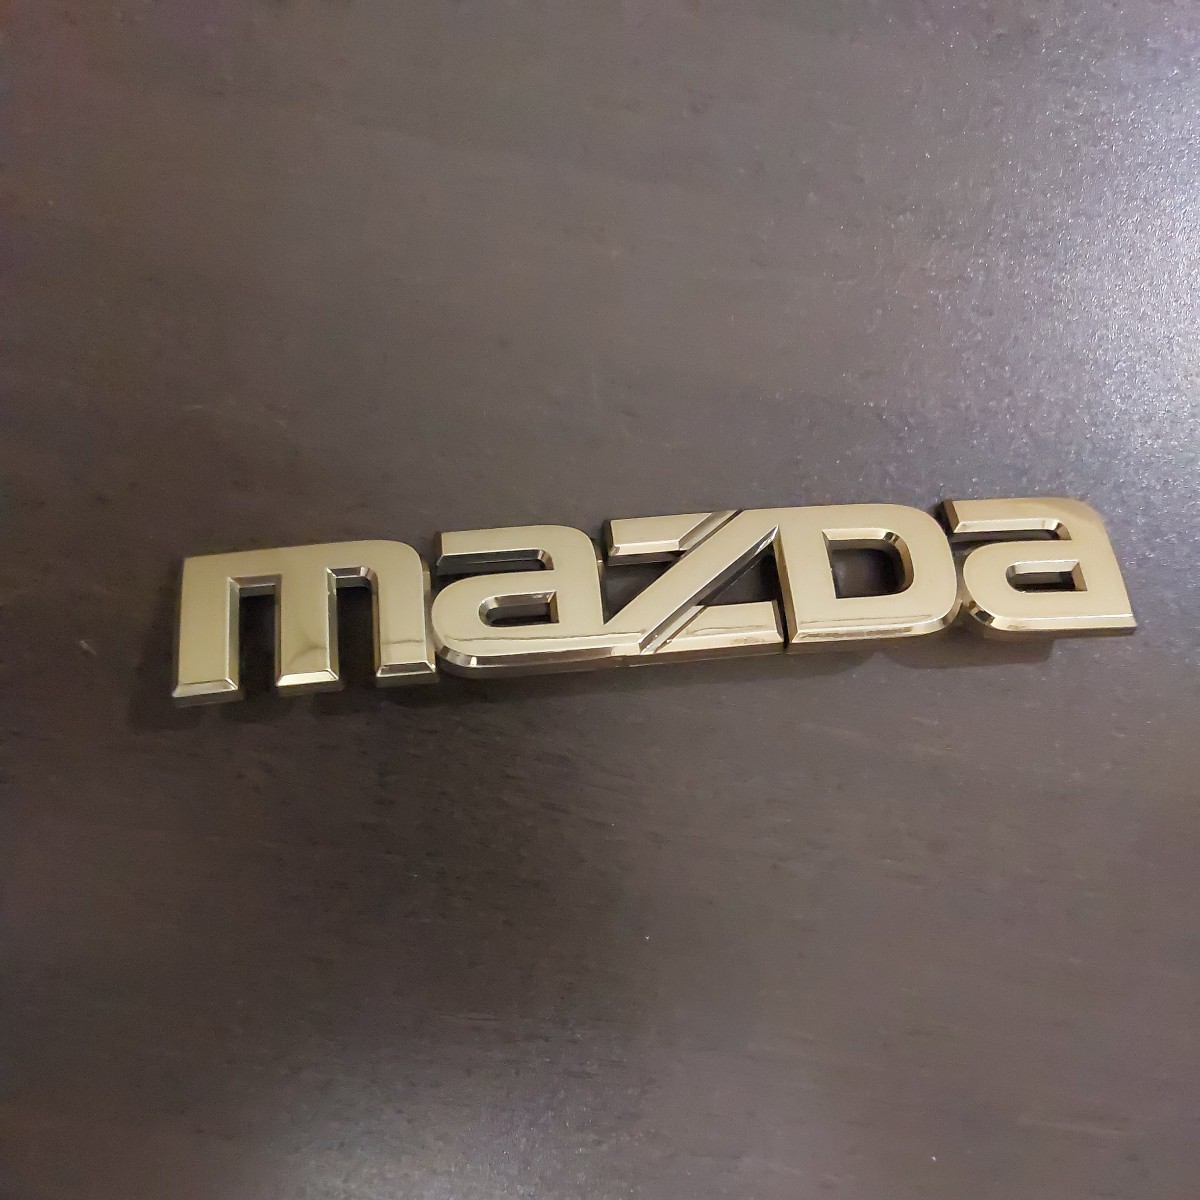 MAZDA GOLD EMBLEM MAZDA Logo "золотая" эмблема VIP LUGUXUY CUSTOMbip Luxury custom 